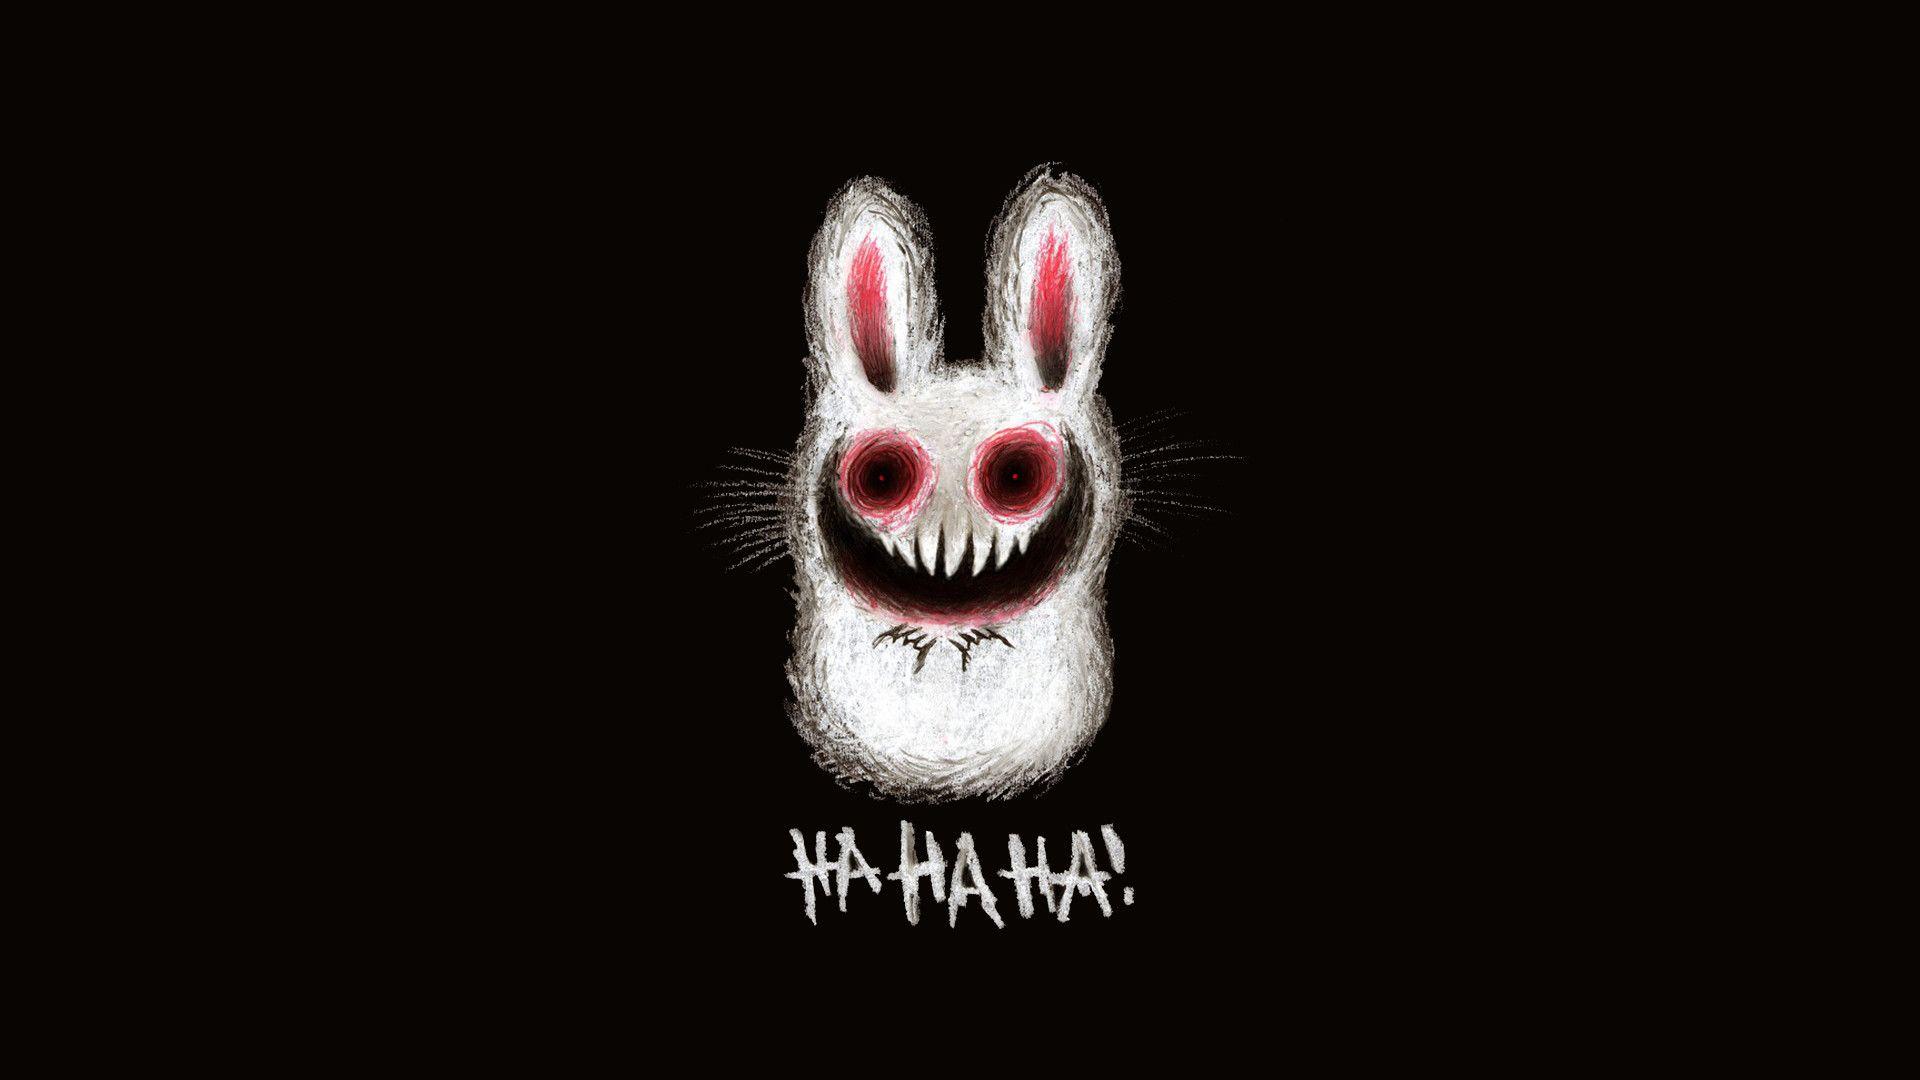 Creepy bunny wallpaper, cute adorable fluffy scary bunny rabbit. Scary wallpaper, Creepy cute, Creepy background